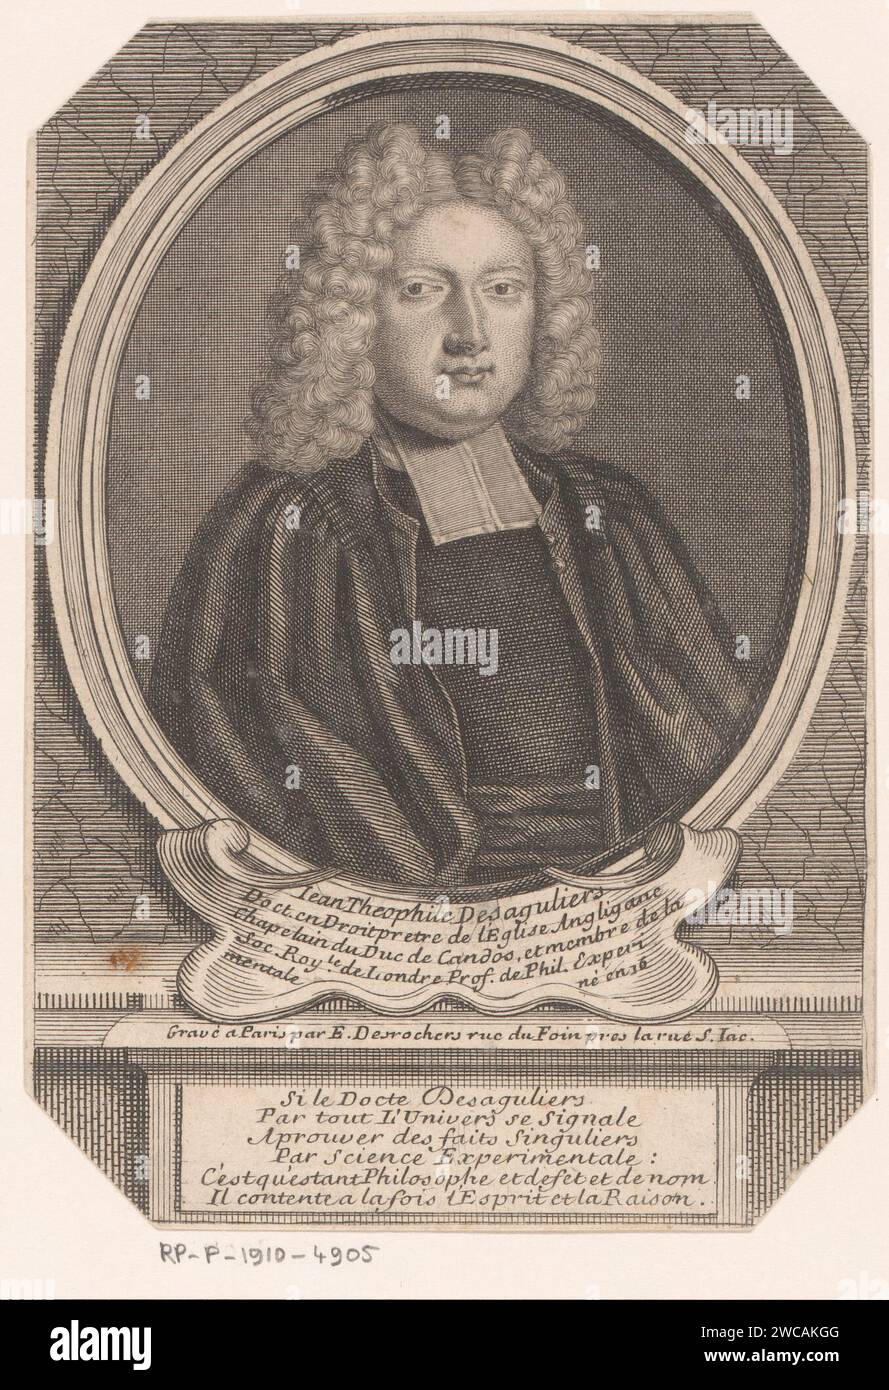 Portret van Jean-Théophile Desaguliers, Etienne Desrochers, c. 1726 stampa Parigi carta incisione persone storiche. studioso, filosofo Foto Stock